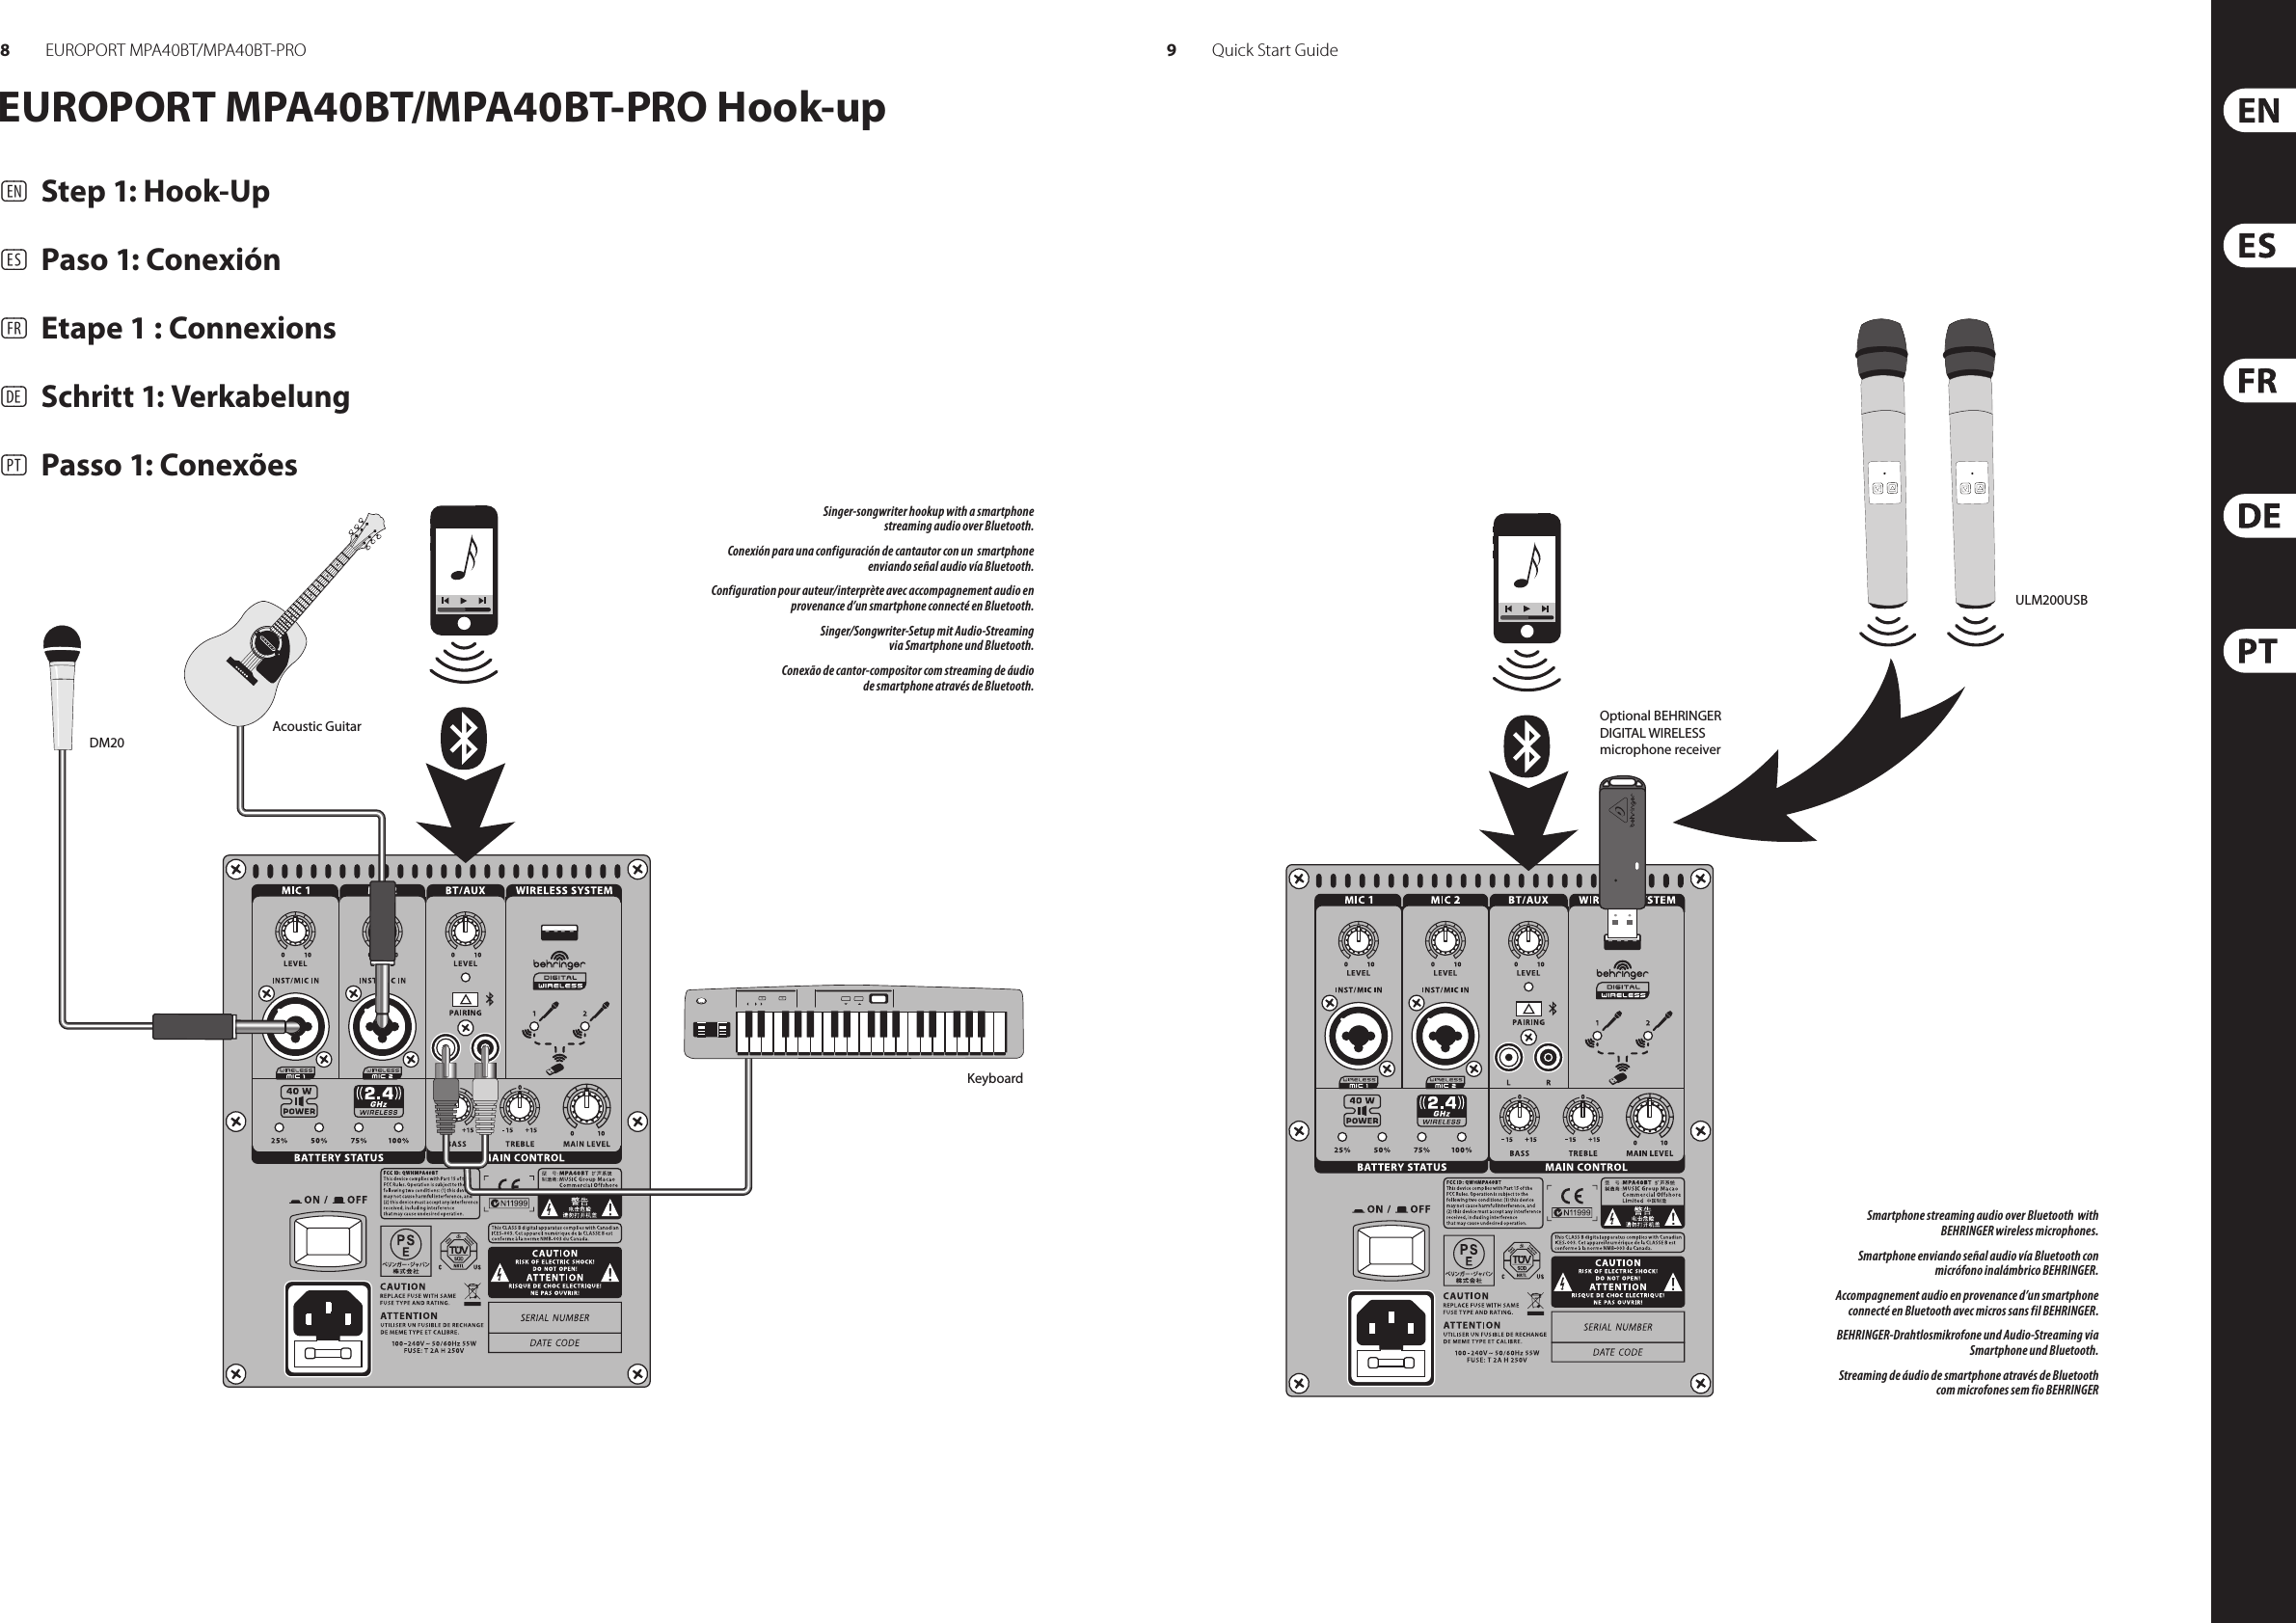 8 9EUROPORT MPA40BT/MPA40BT-PRO Quick Start GuideOptional BEHRINGER DIGITAL WIRELESS microphone receiverULM200USBKeyboardAcoustic GuitarDM20(EN)  Step 1: Hook-Up(ES) Paso 1: Conexión(FR) Etape 1 : Connexions(DE) Schritt 1: Verkabelung(PT) Passo 1: ConexõesEUROPORT MPA40BT/MPA40BT-PRO Hook-upSmartphone streaming audio over Bluetooth  with BEHRINGER wireless microphones.Smartphone enviando señal audio vía Bluetooth con micrófono inalámbrico BEHRINGER.Accompagnement audio en provenance d’un smartphone  connecté en Bluetooth avec micros sans fil BEHRINGER.BEHRINGER-Drahtlosmikrofone und Audio-Streaming via Smartphone und Bluetooth.Streaming de áudio de smartphone através de Bluetooth com microfones sem fio BEHRINGERSinger-songwriter hookup with a smartphone  streaming audio over Bluetooth.Conexión para una configuración de cantautor con un  smartphone enviando señal audio vía Bluetooth.Configuration pour auteur/interprète avec accompagnement audio en provenance d’un smartphone connecté en Bluetooth.Singer/Songwriter-Setup mit Audio-Streaming via Smartphone und Bluetooth.Conexão de cantor-compositor com streaming de áudio de smartphone através de Bluetooth.